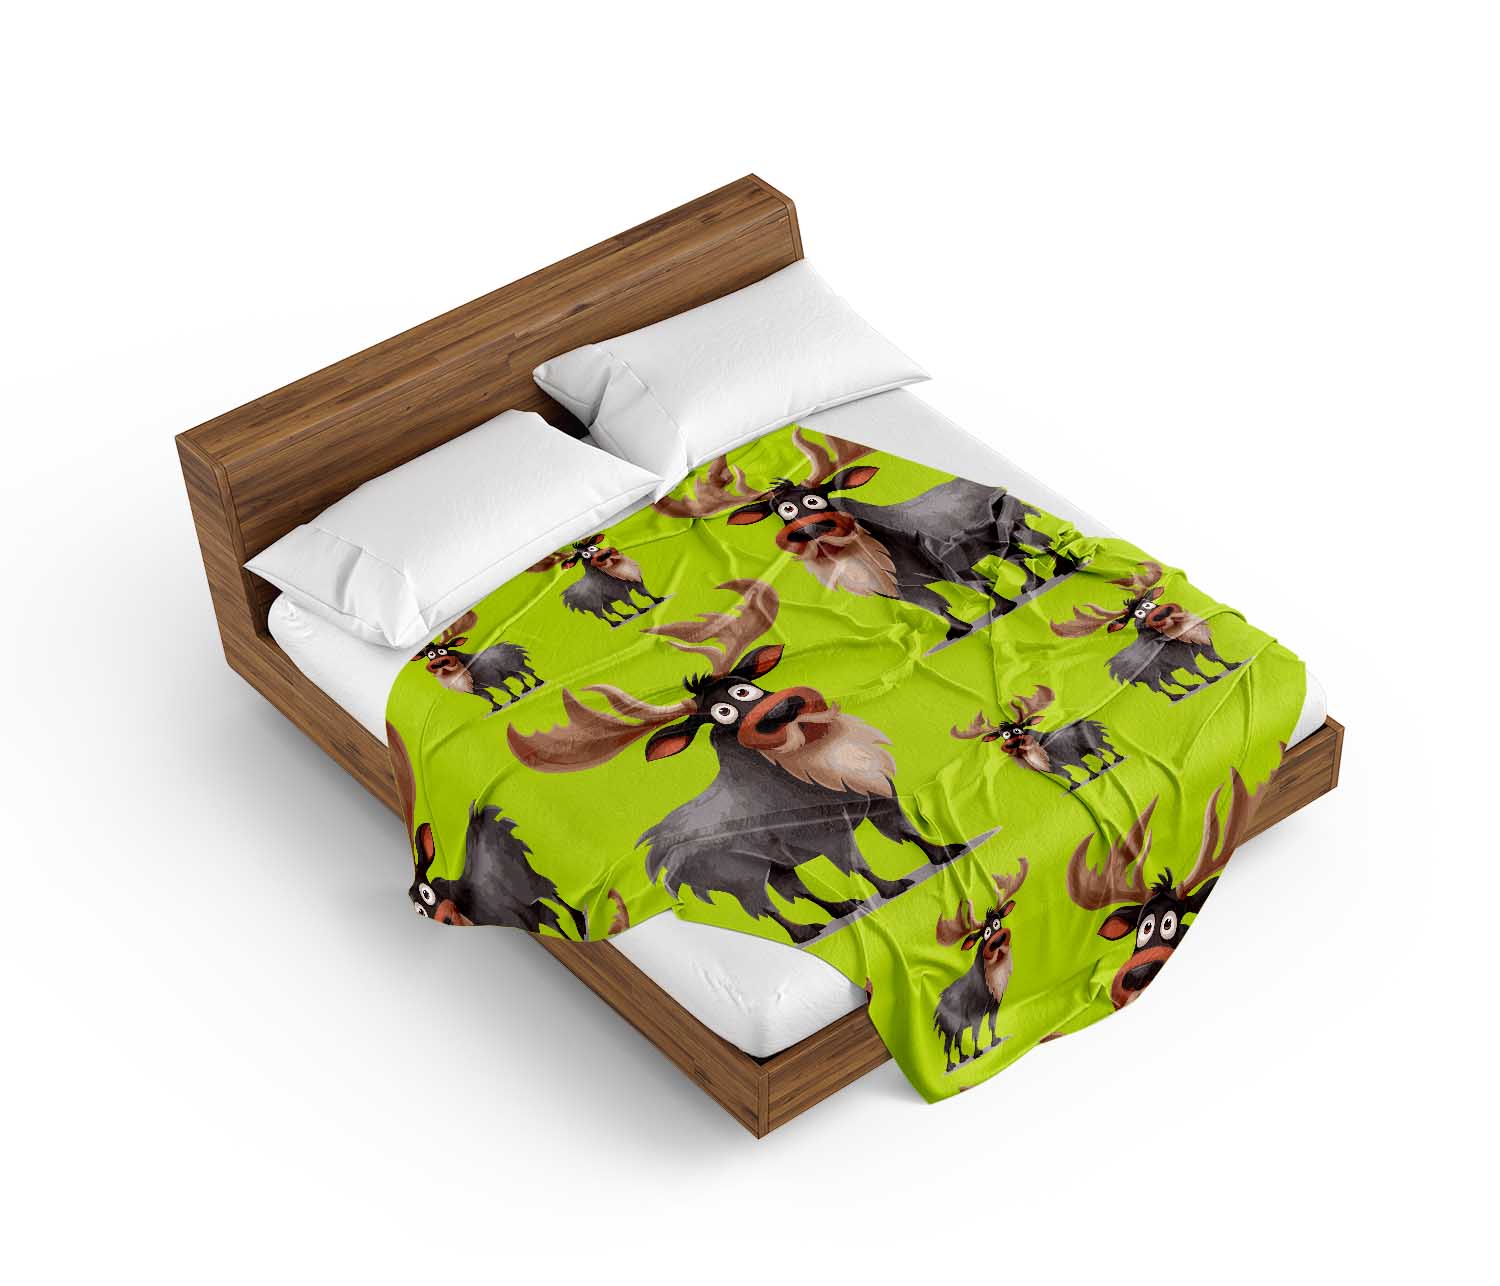 Moose Doona + Pillow - fungear.com.au